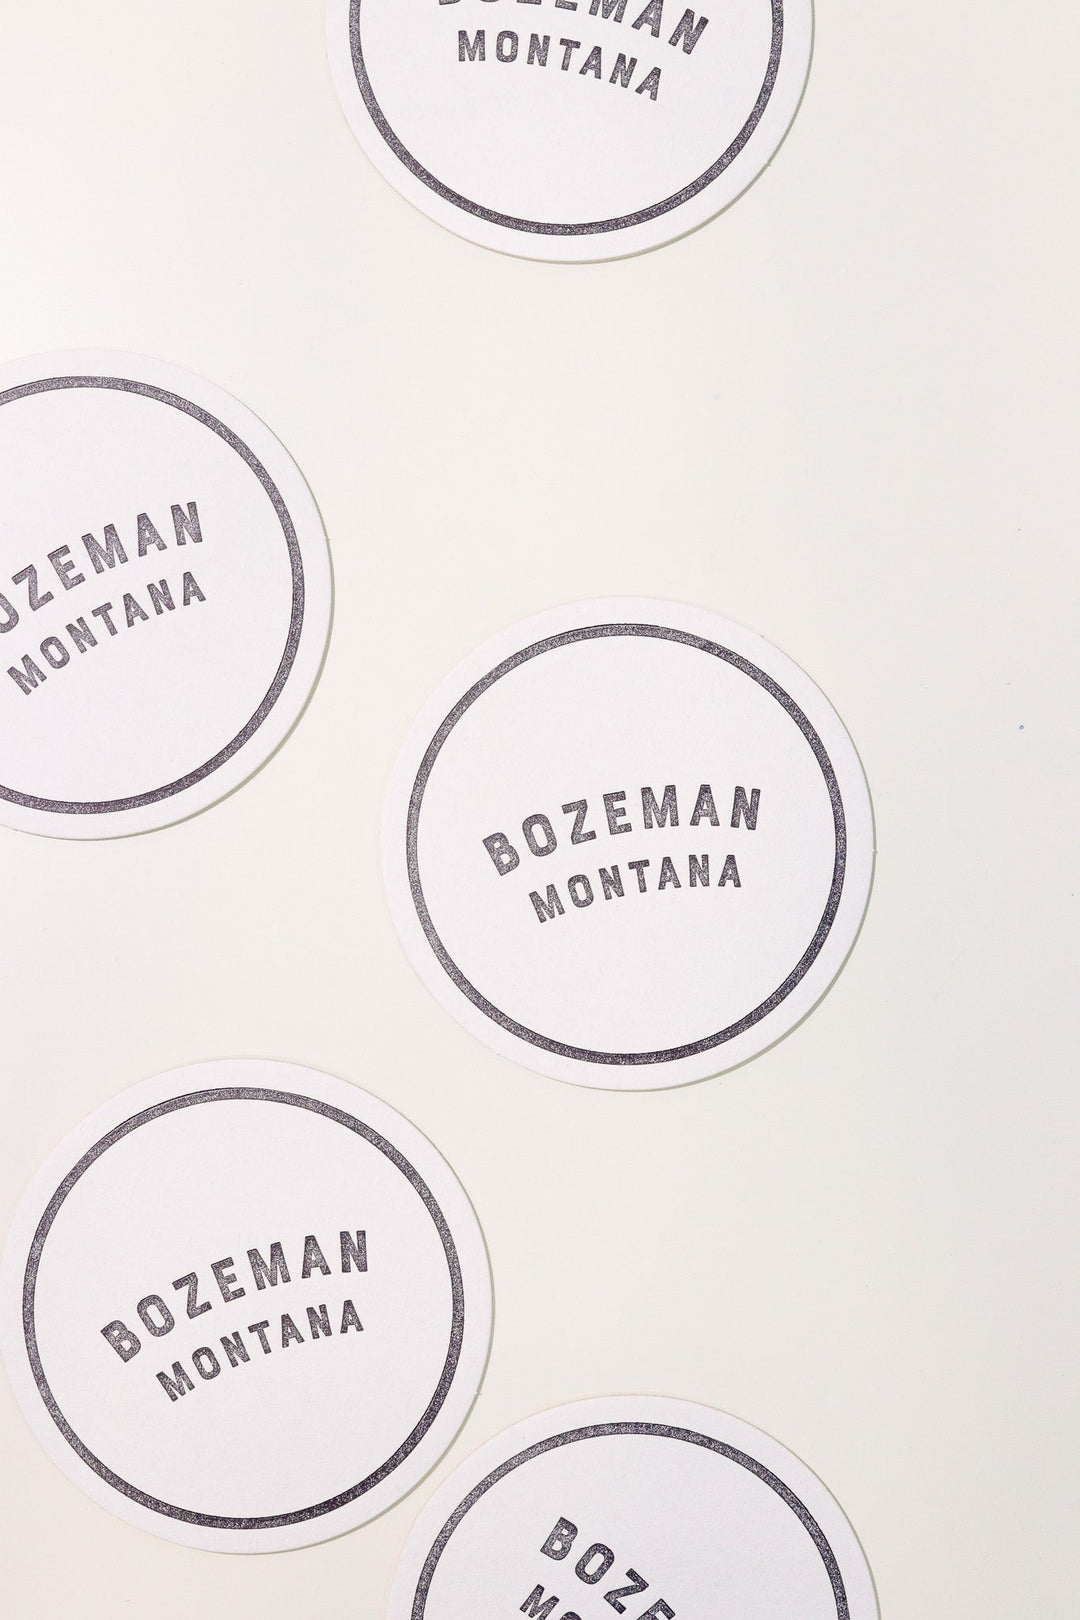 Bozeman, Montana Coasters - Heyday